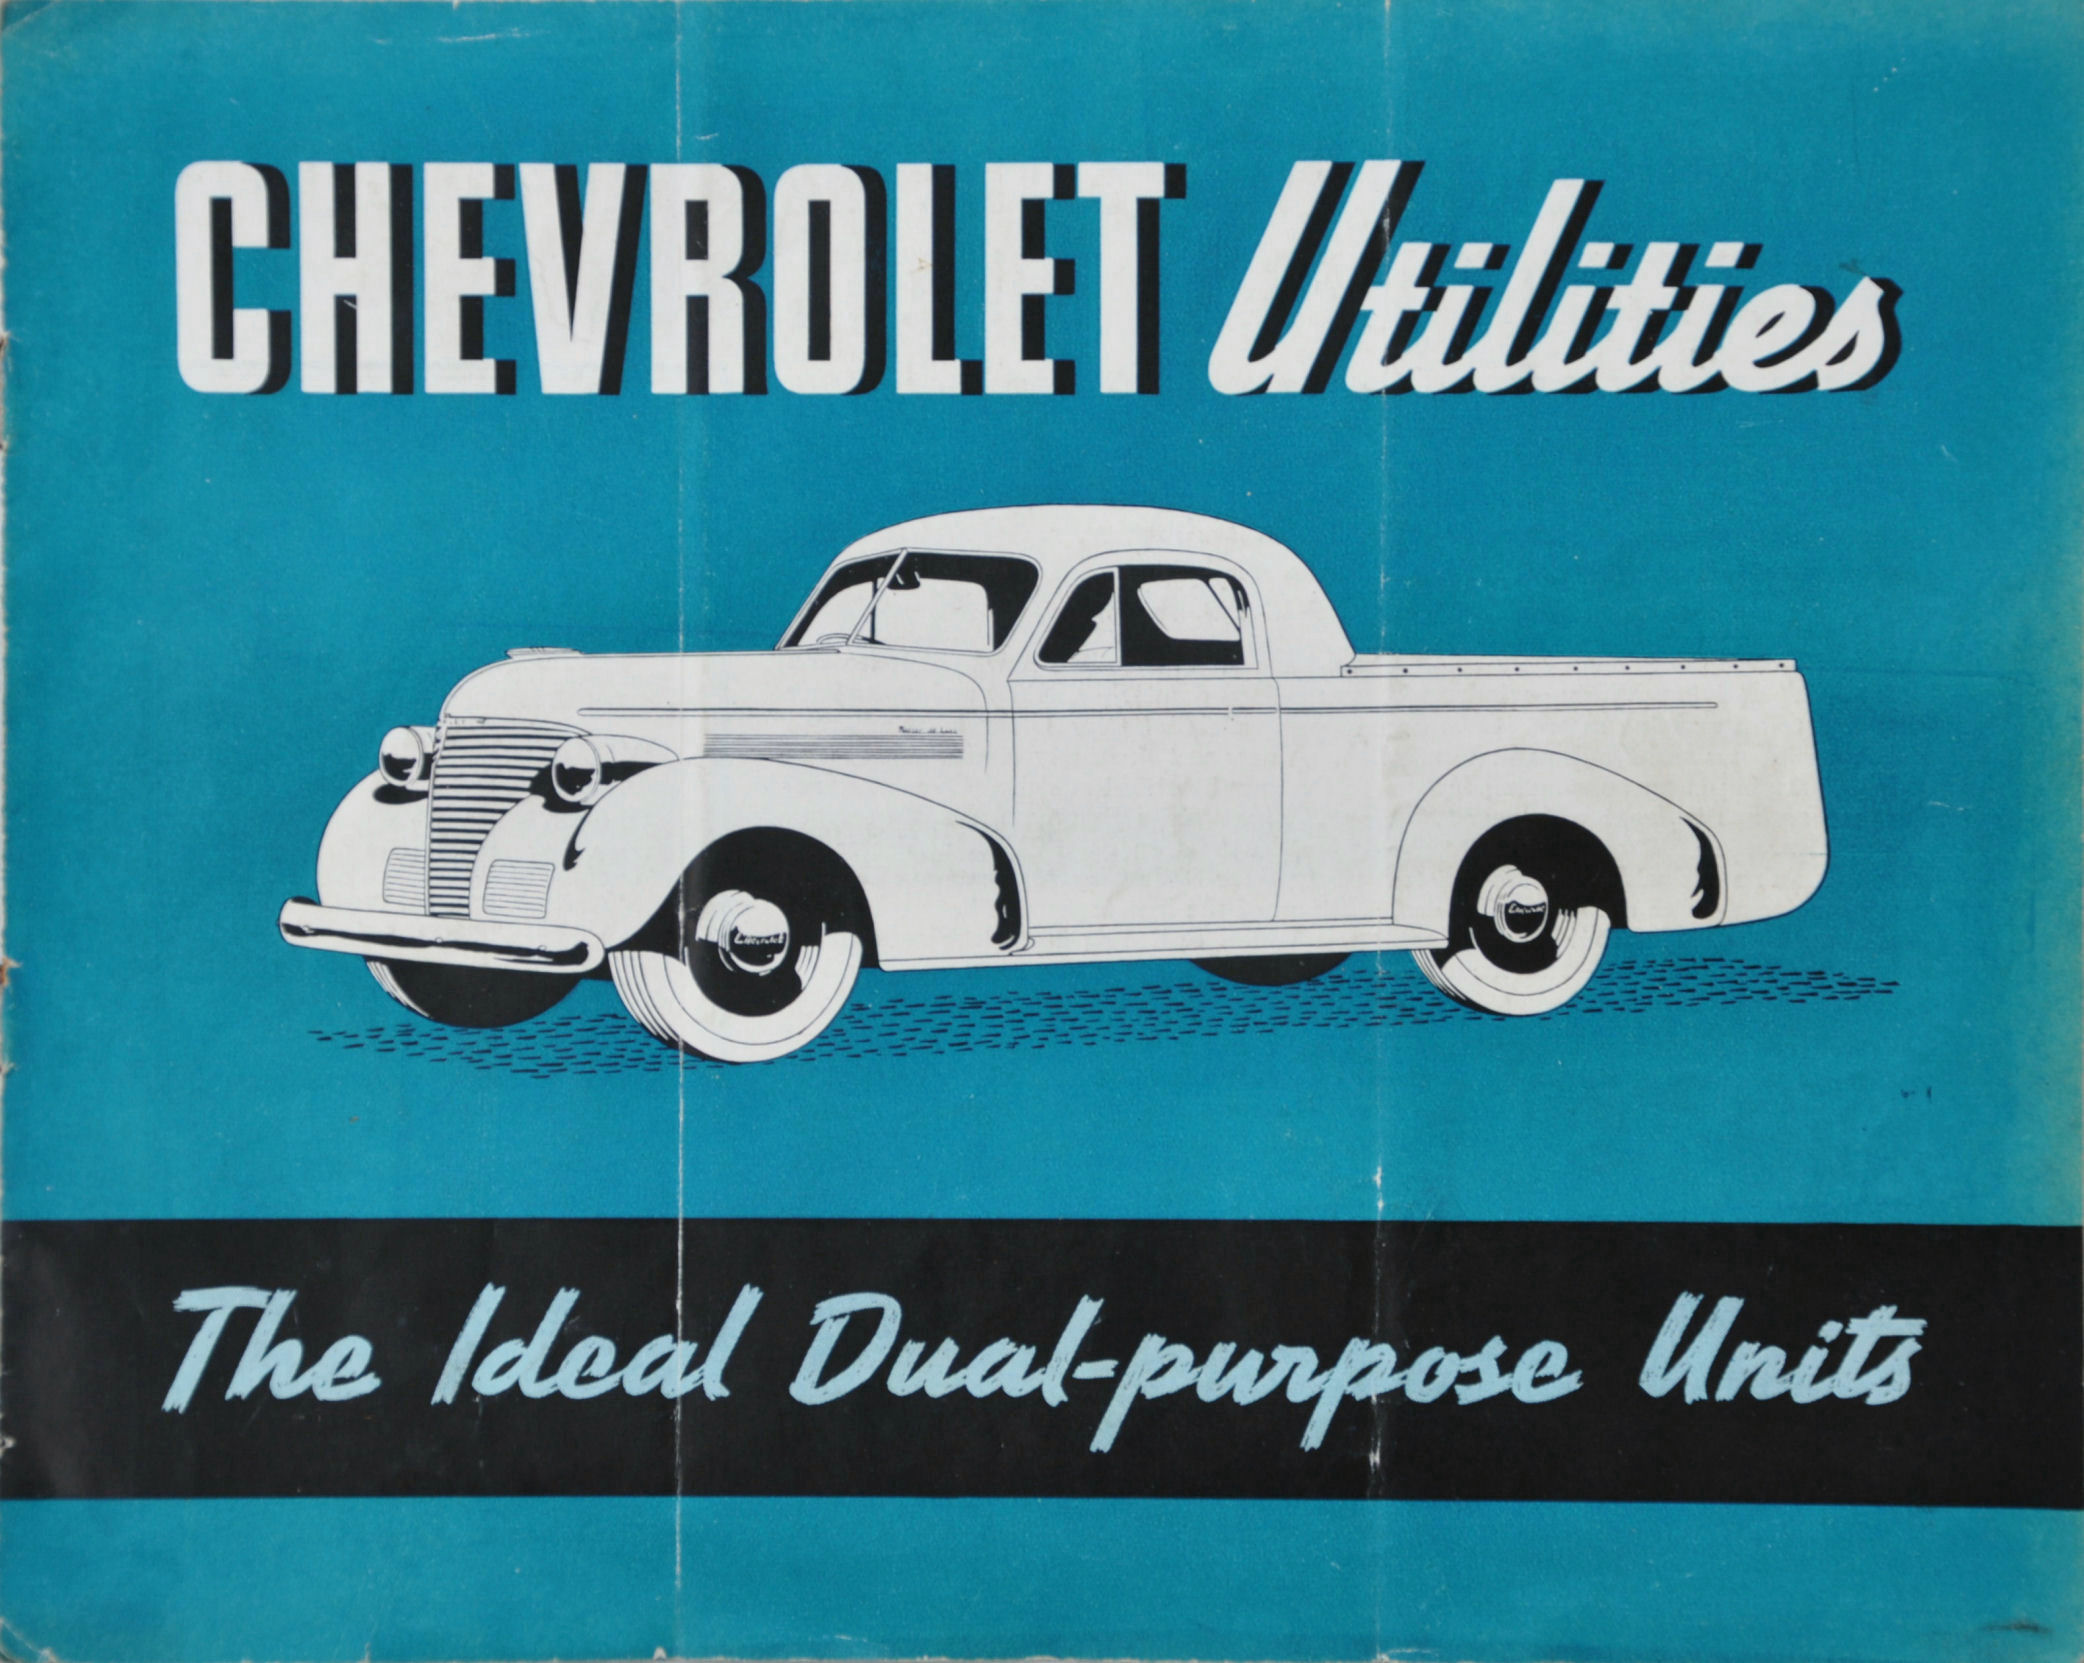 1939 Chevrolet Utilities-01